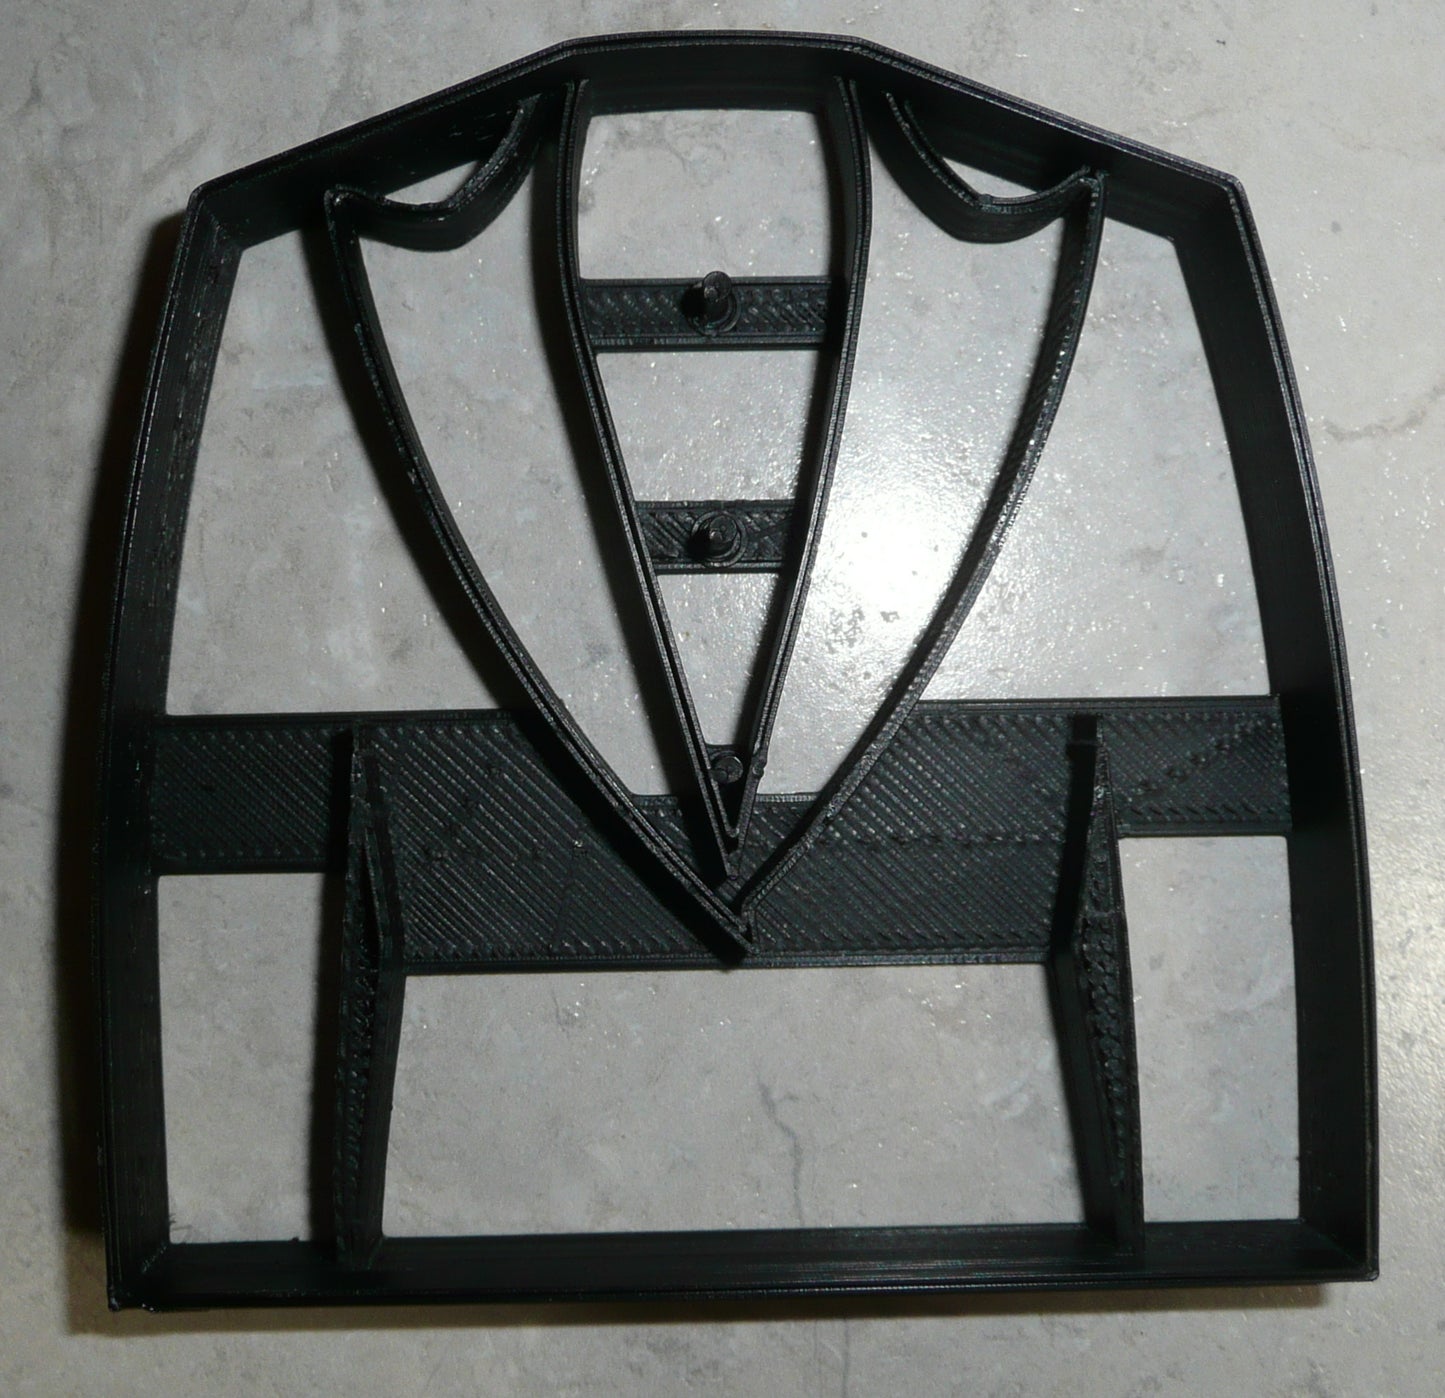 Tuxedo Tux Black Tie Formal Suit Wedding Bridal Shower Cookie Cutter USA PR2588